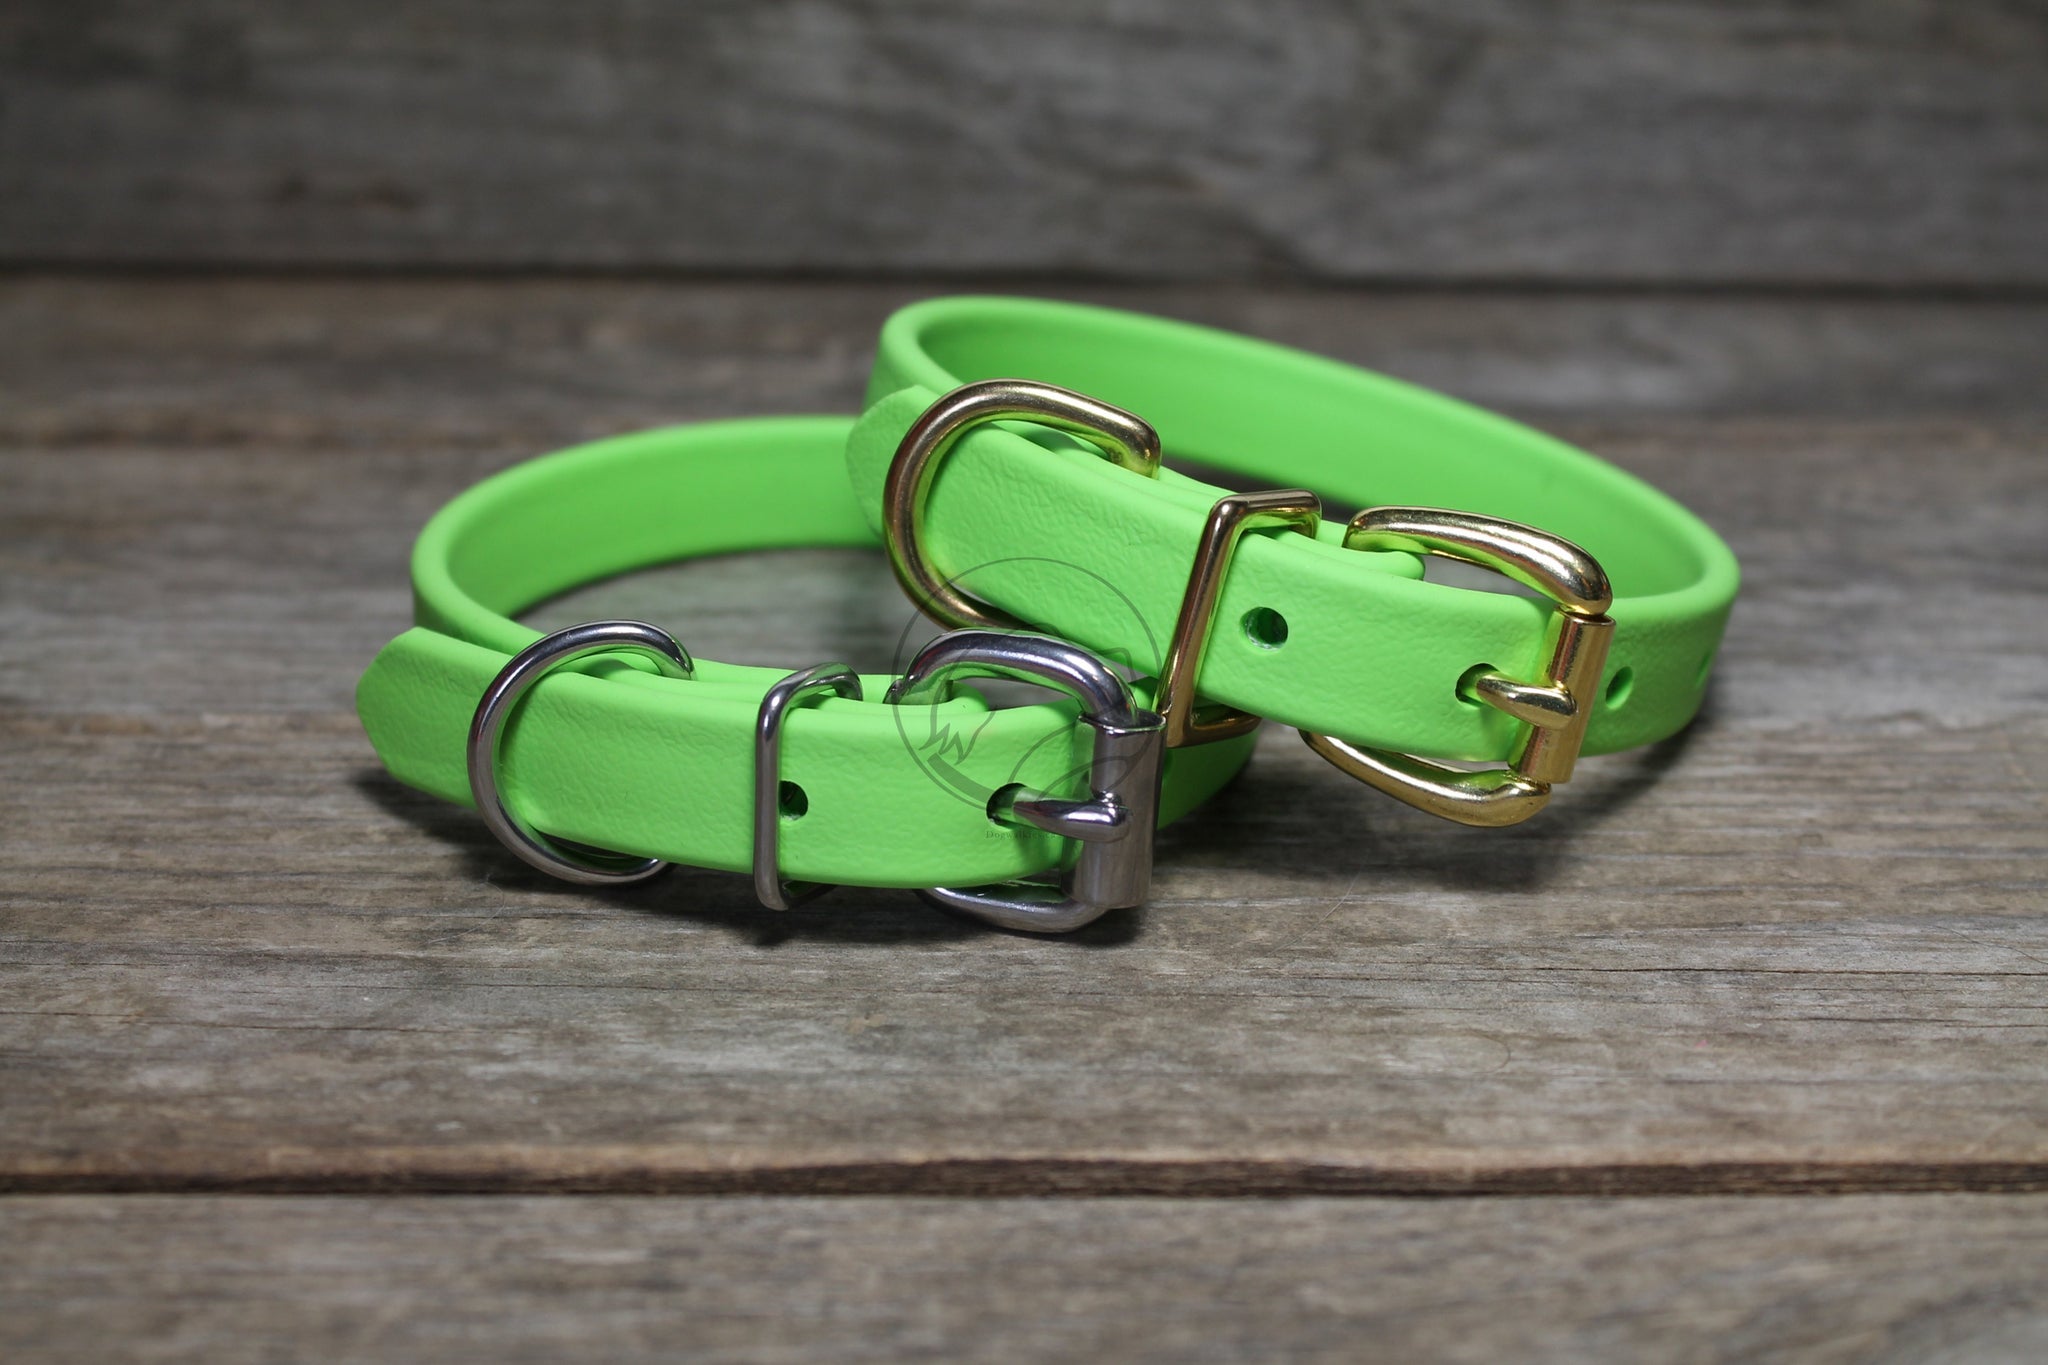 Lime Green Biothane Dog Collar - 5/8"(16mm) wide